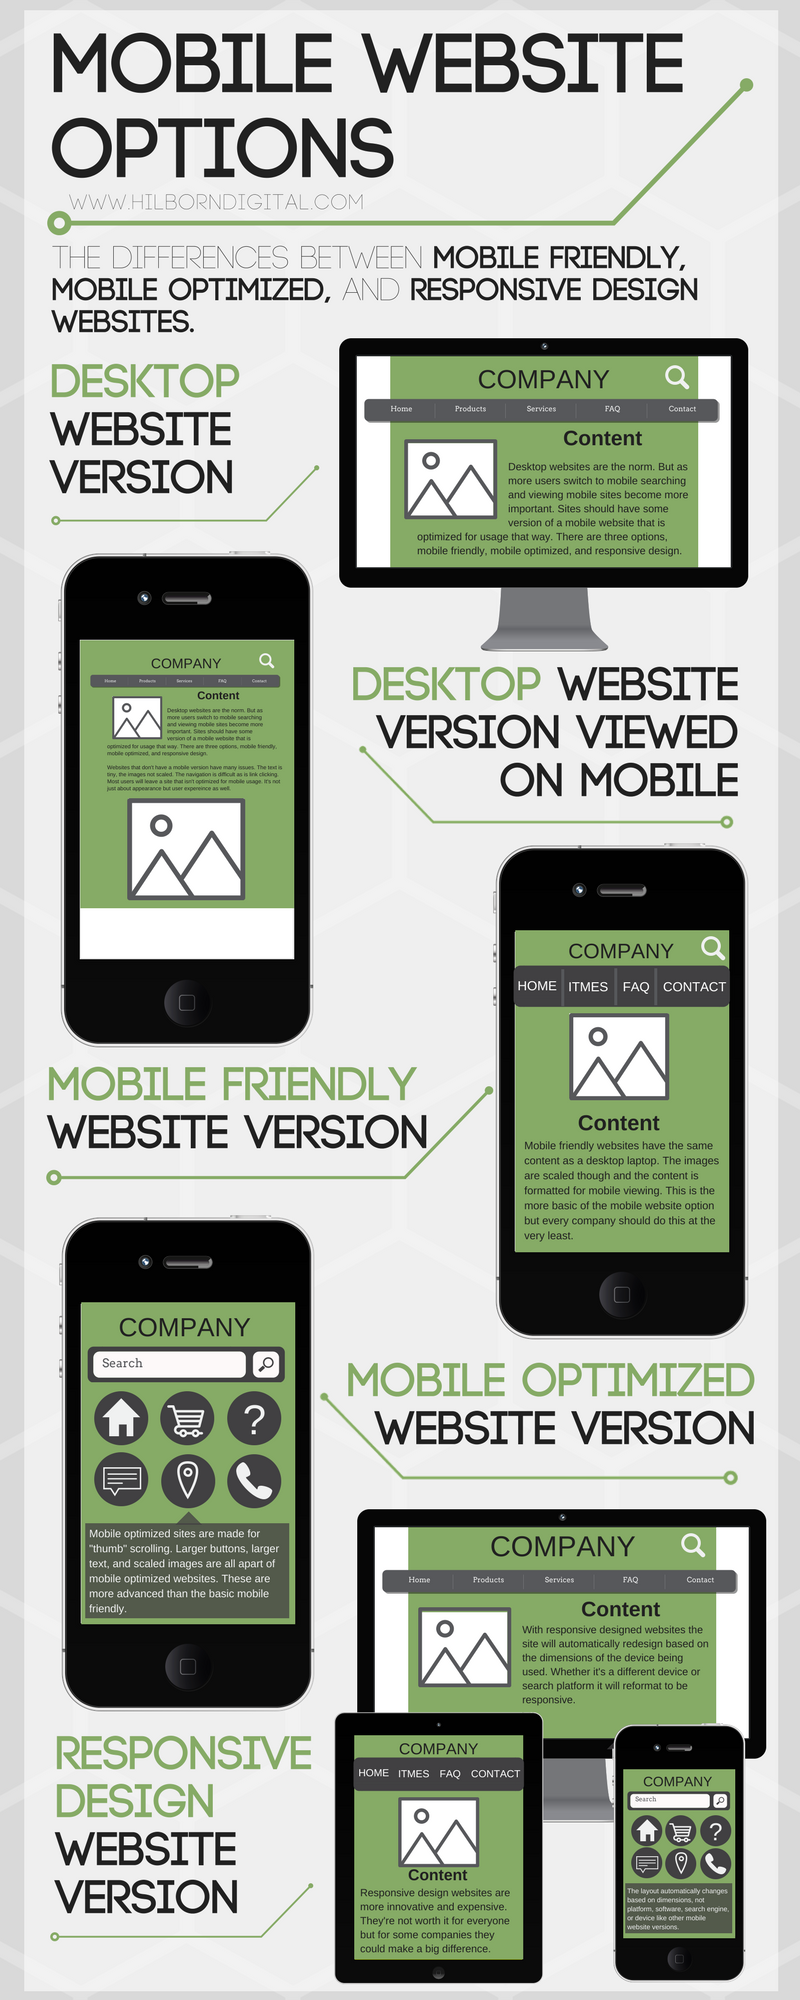 Mobile Friendly Website, Mobile Optimized Website, Responsive Design Website